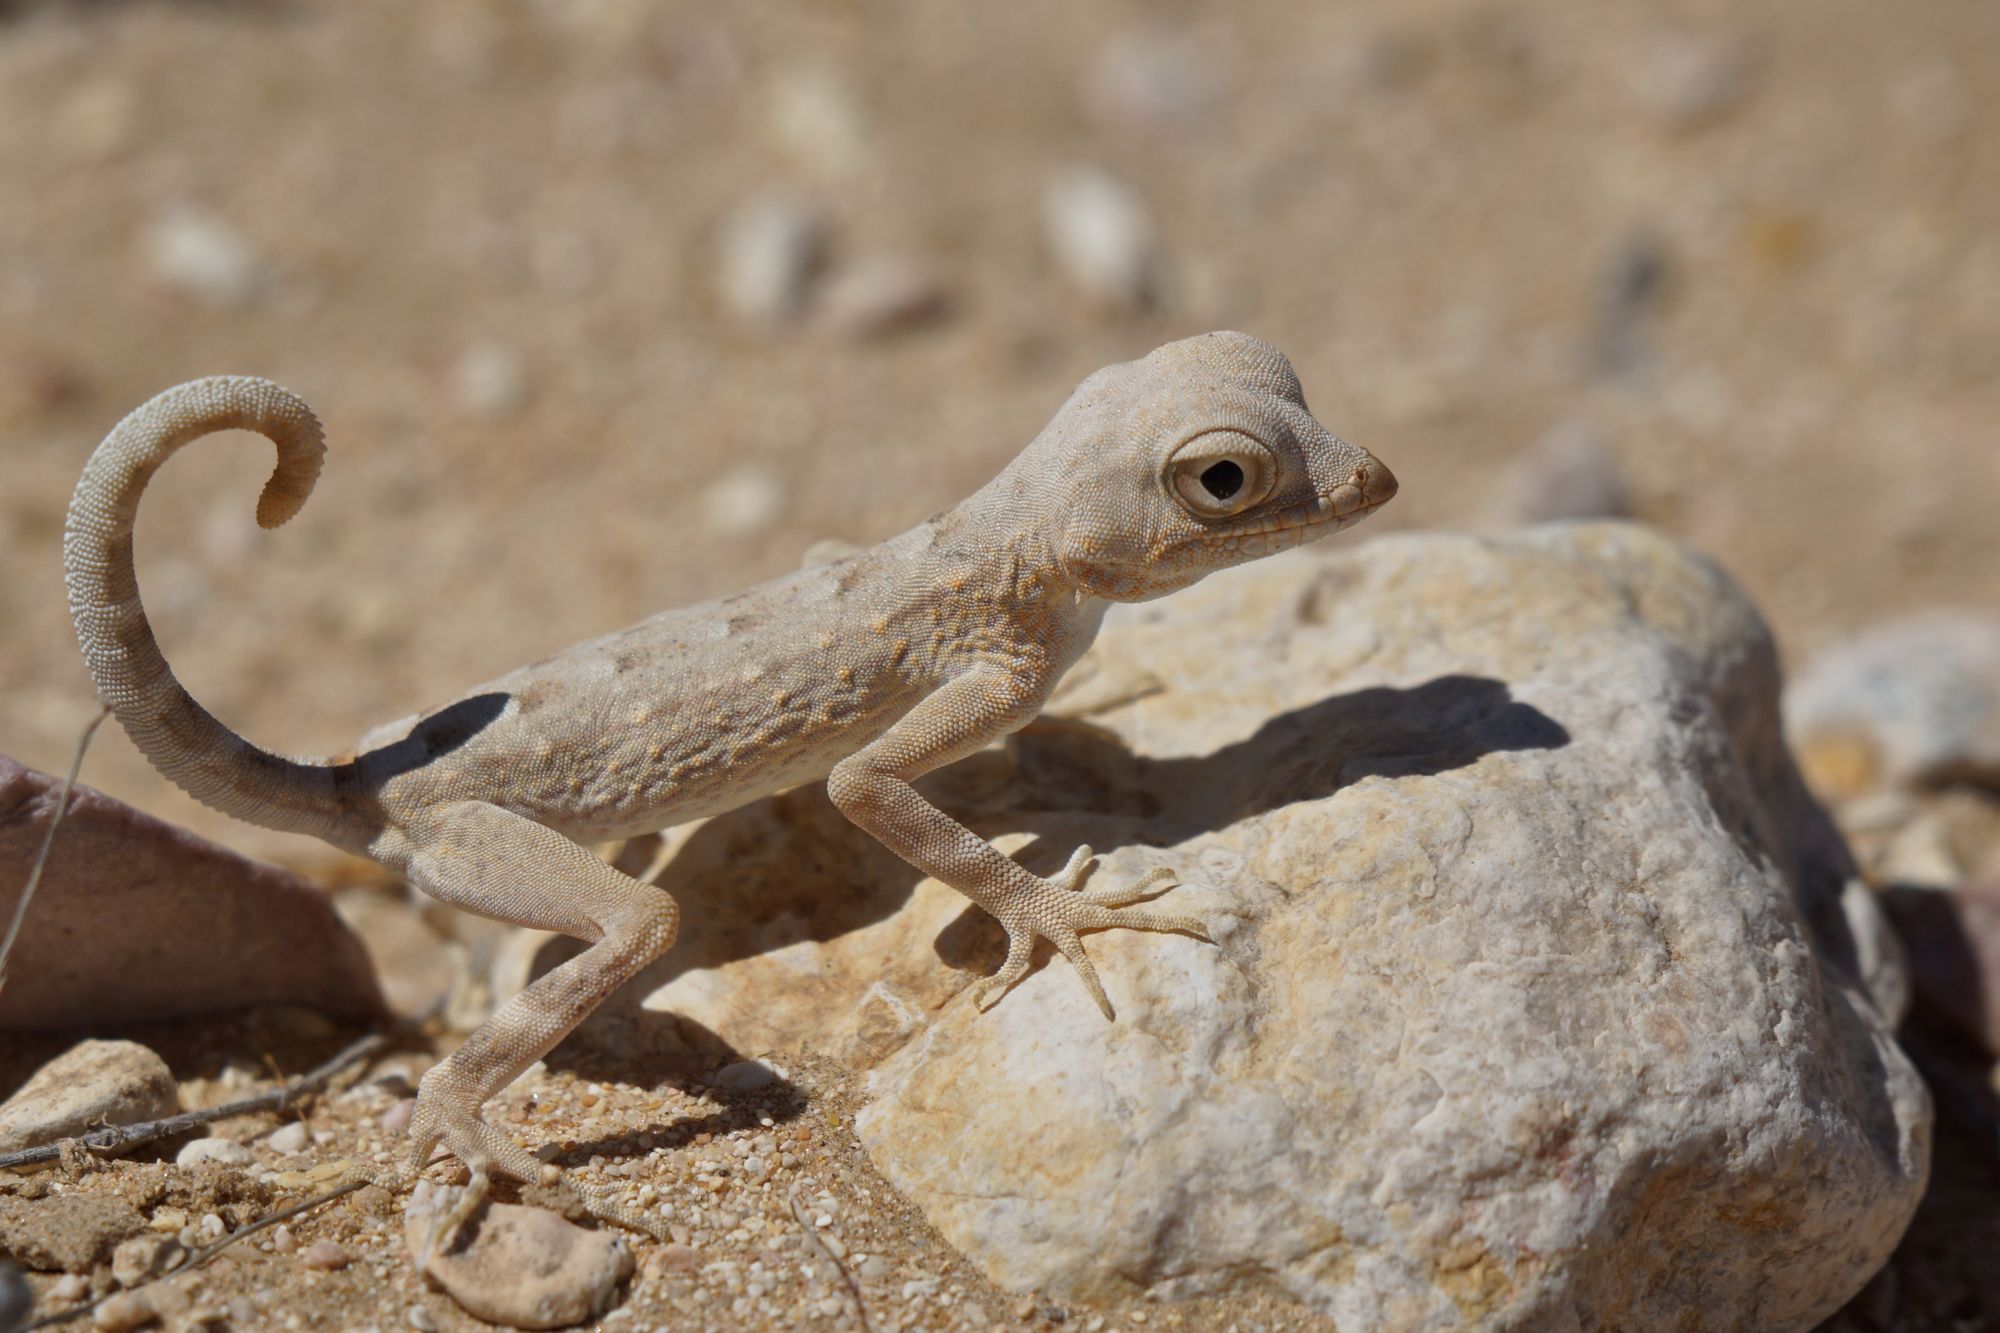 Carters semaphore gecko (pristurus carteri), Huqf